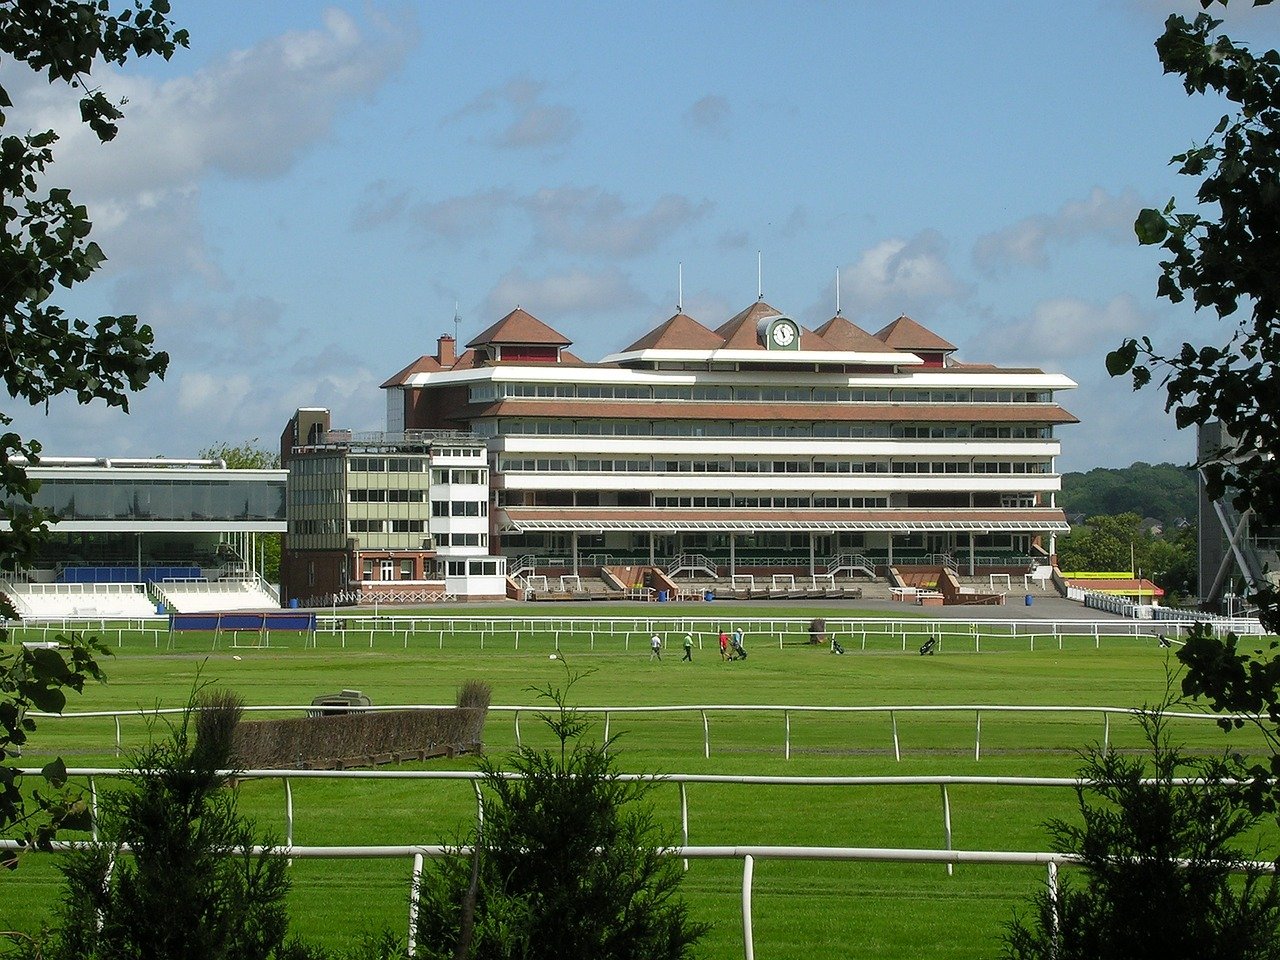 Image of Newbury Racecourse